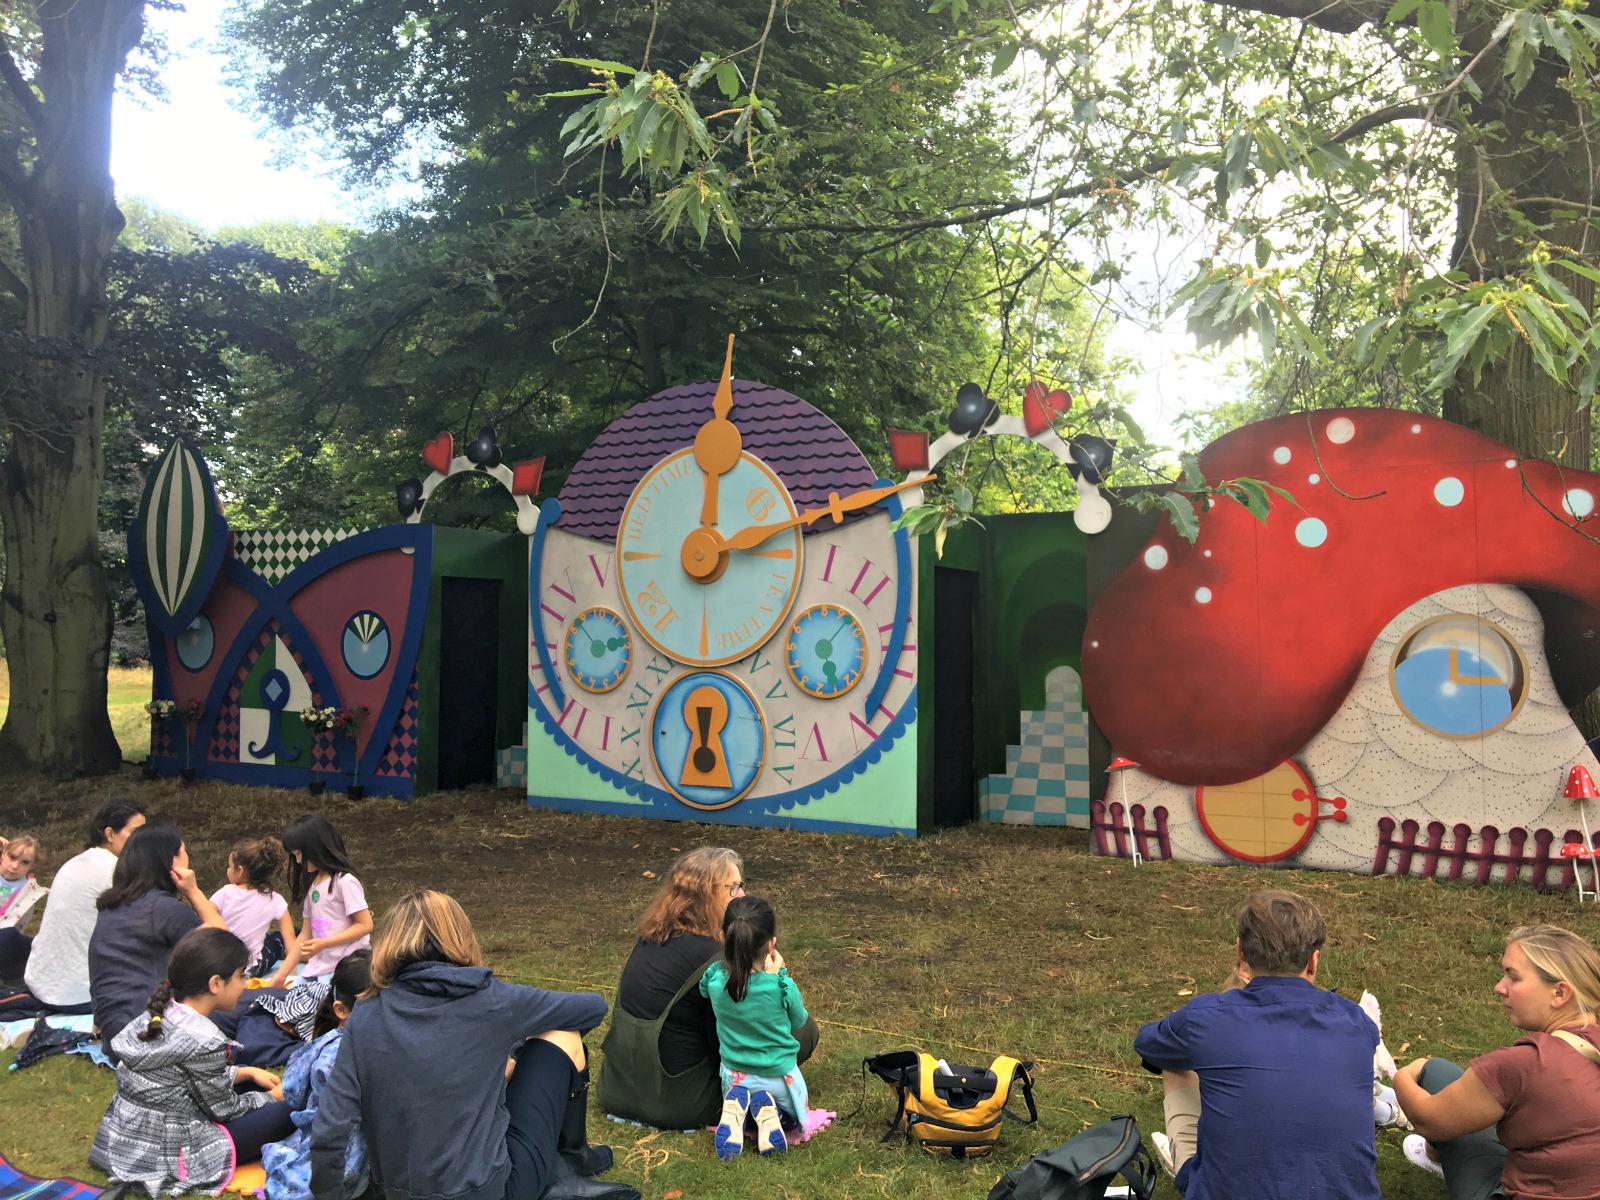 Stage set for Alice in Wonderful, Kew Gardens